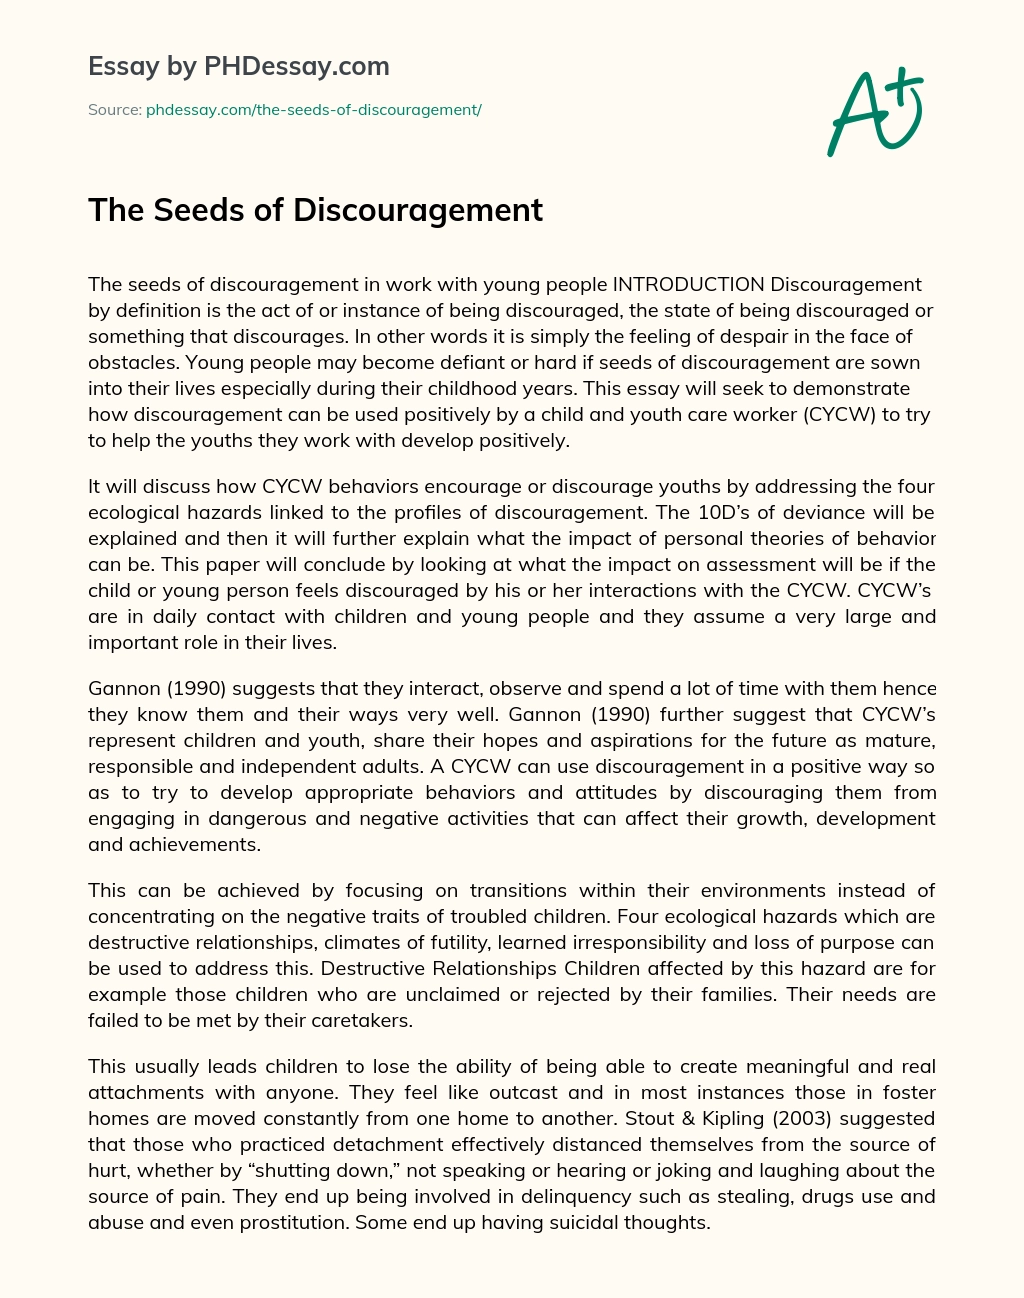 The Seeds of Discouragement essay